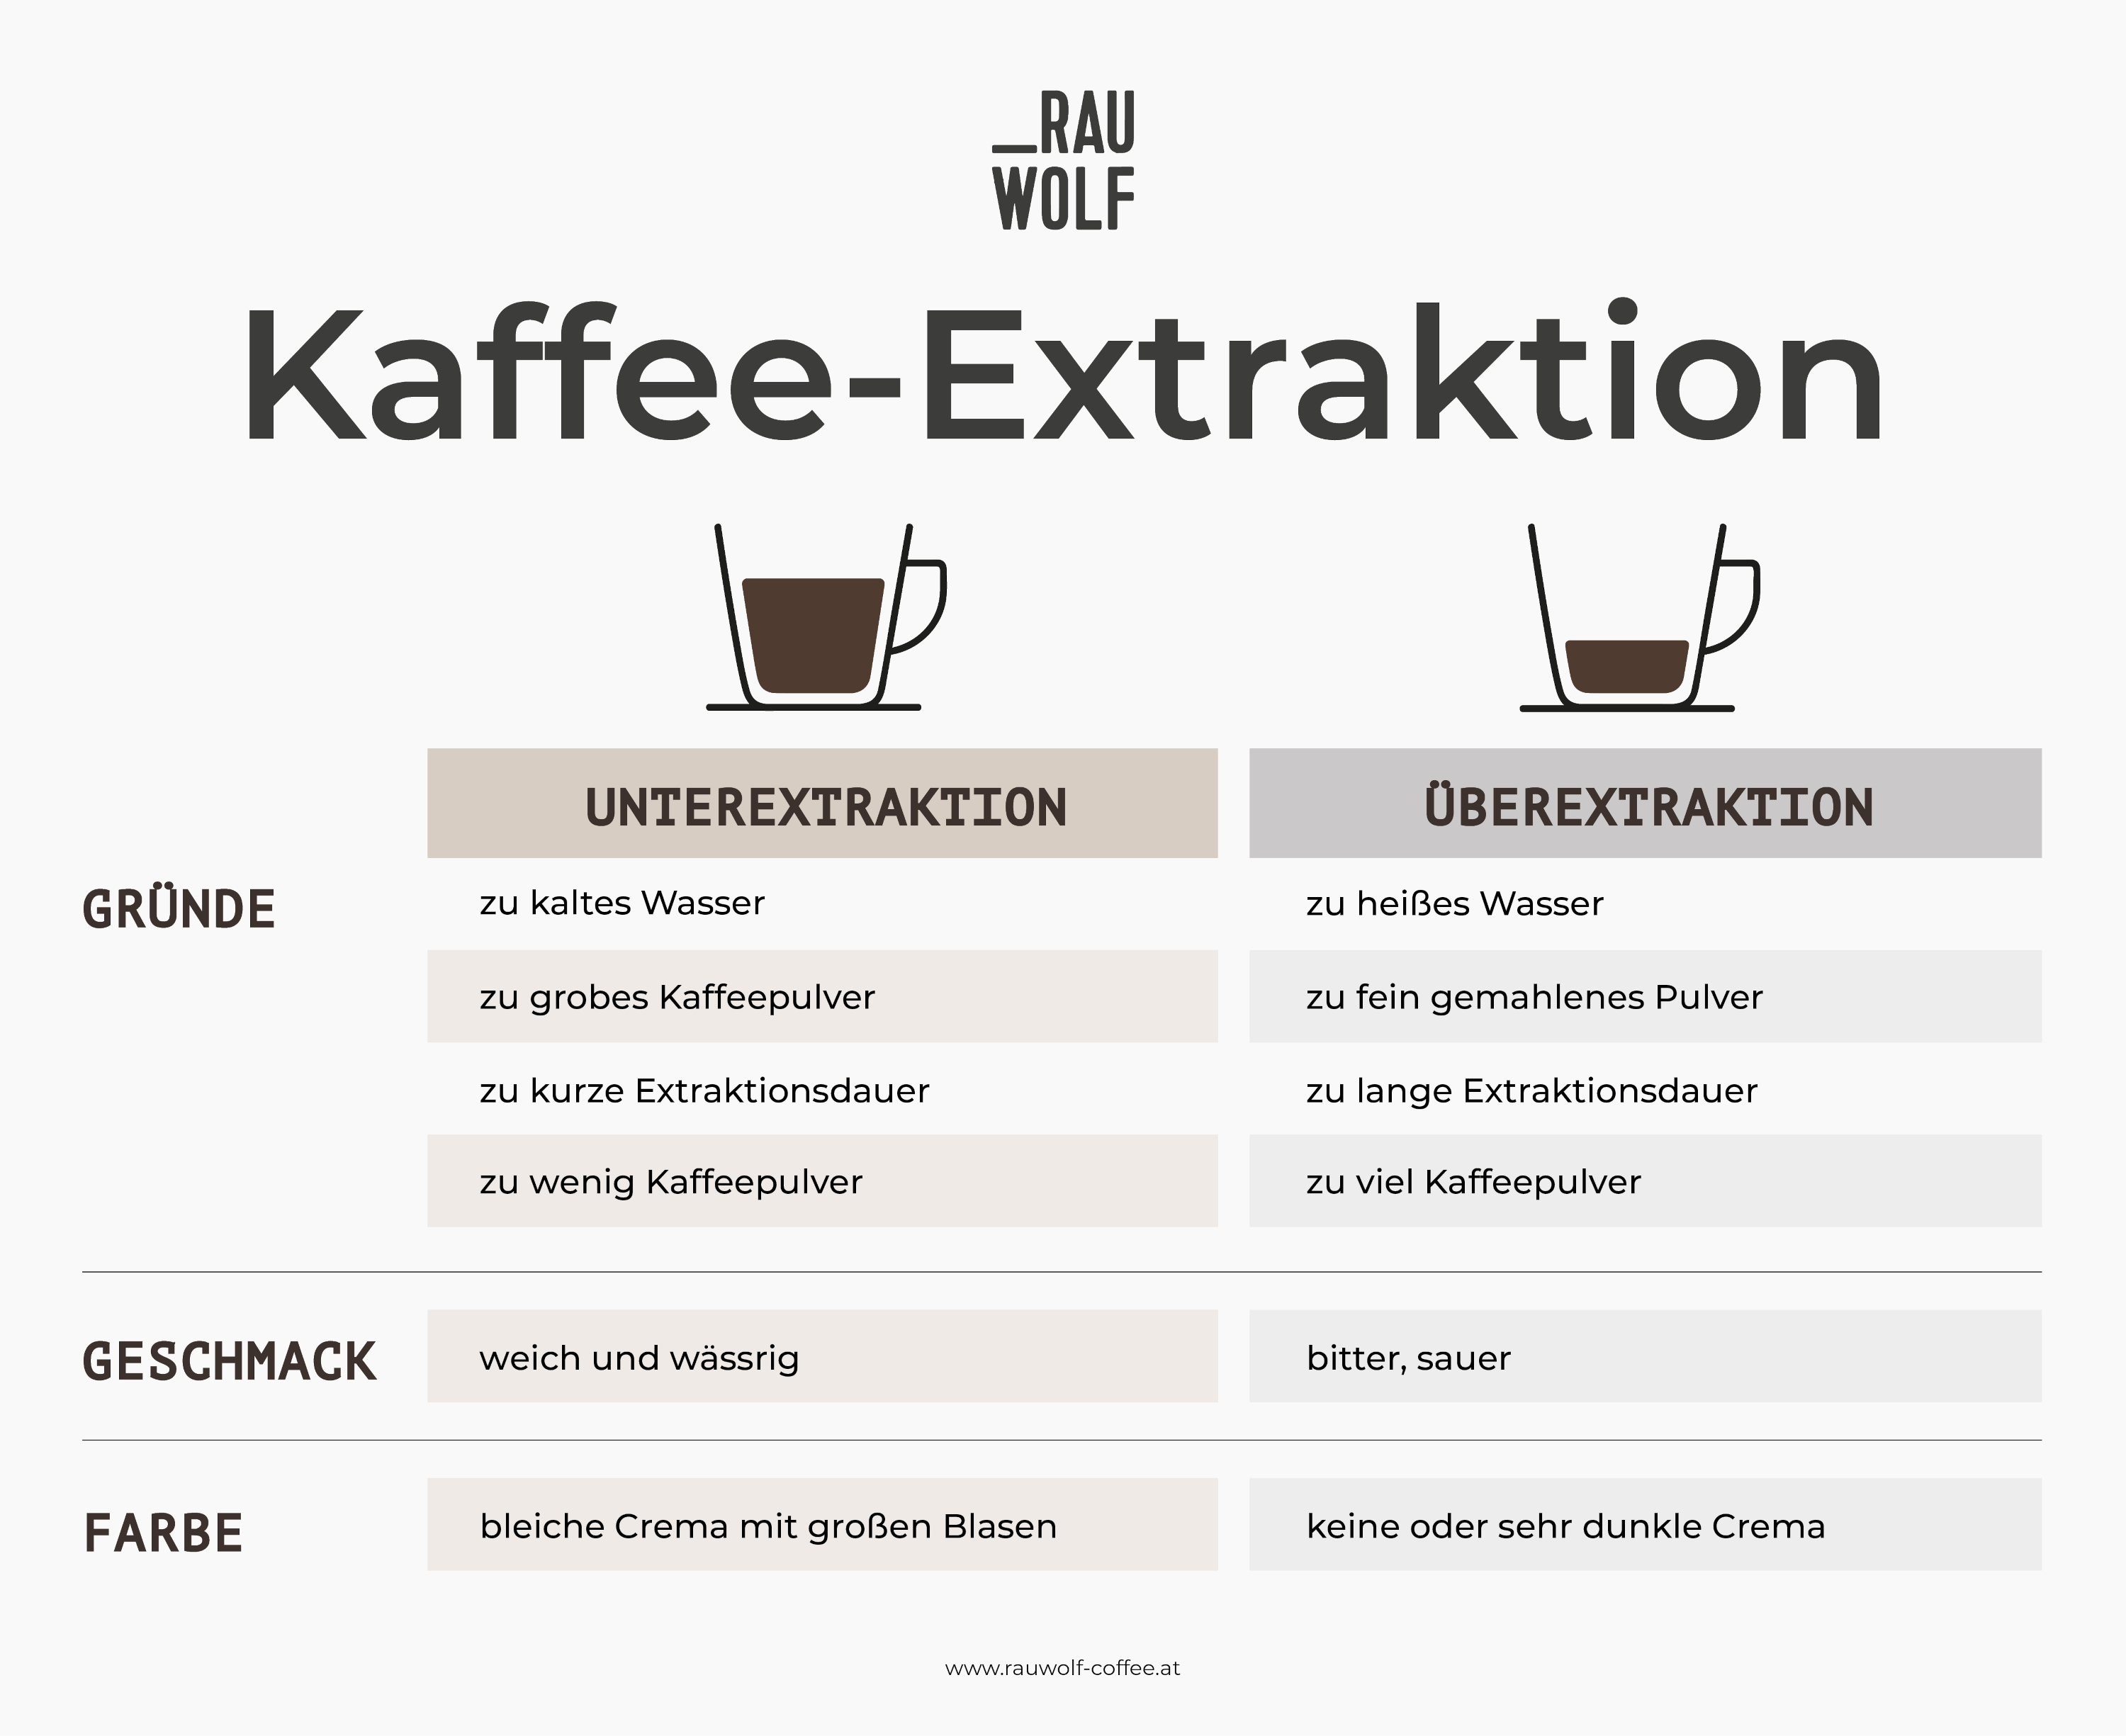 Kaffee-Extraktion: Überextraktion + Unterextraktion